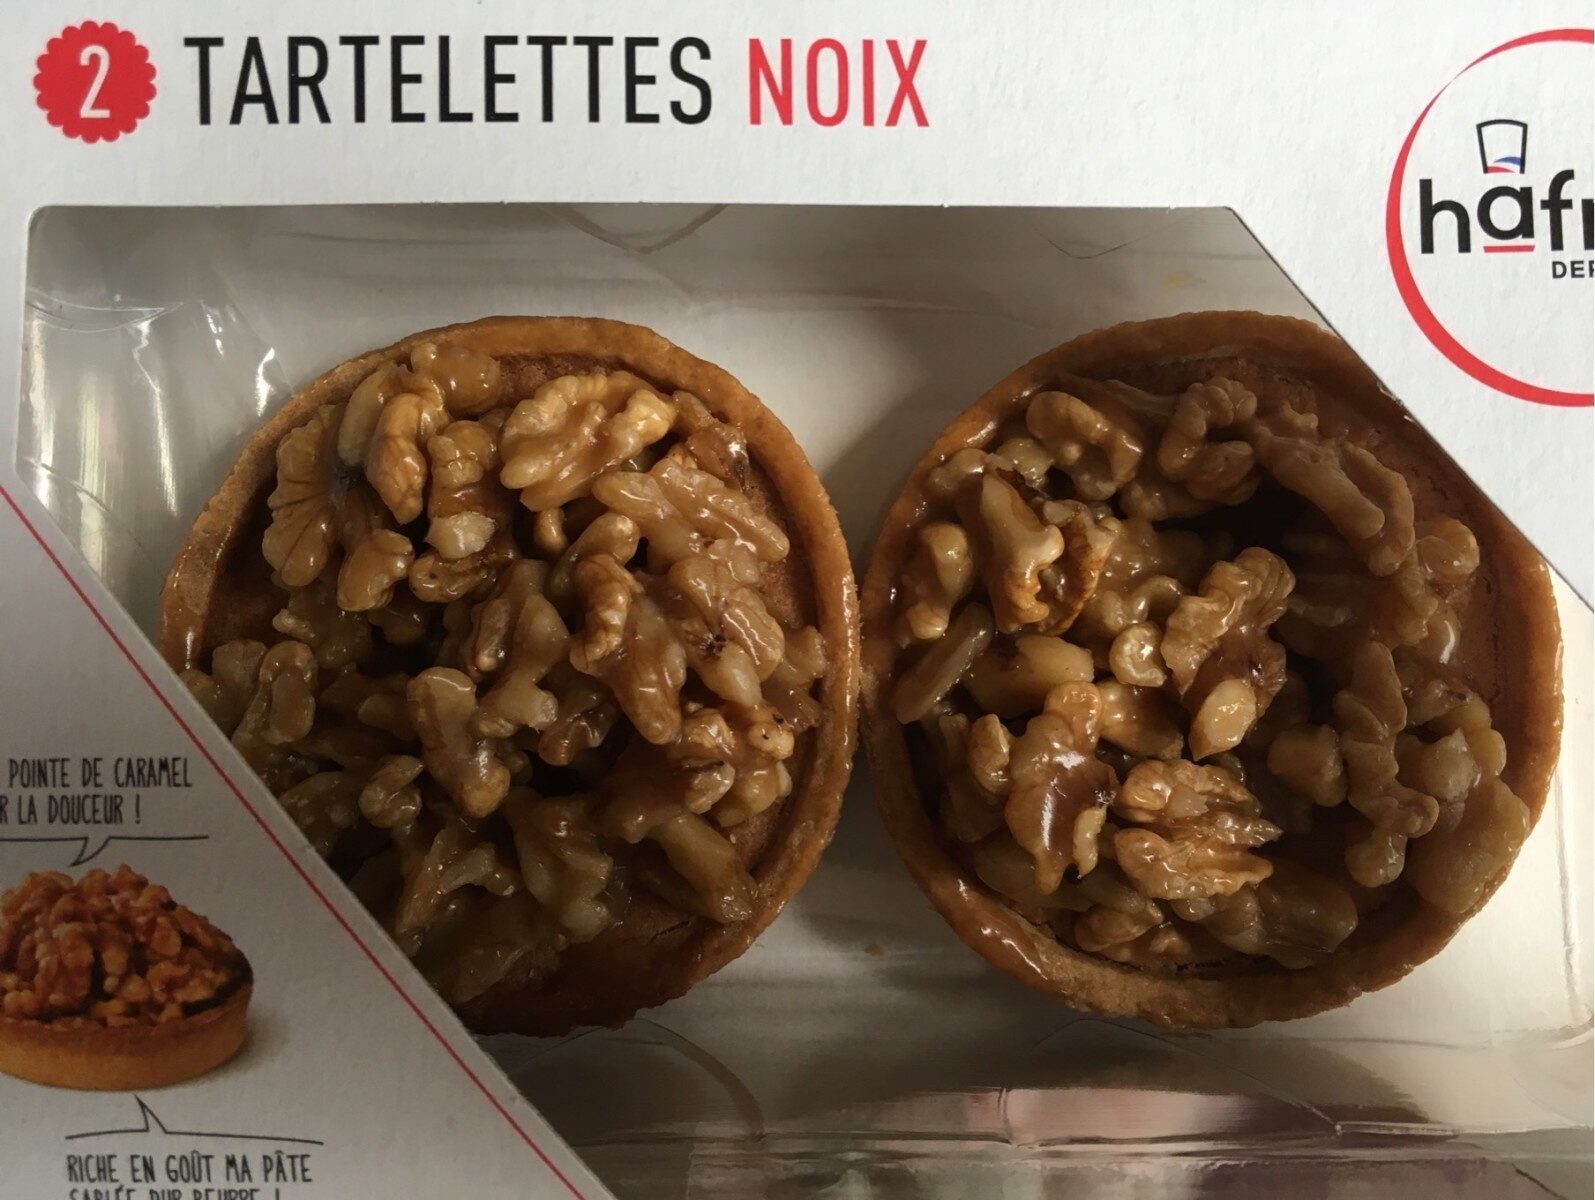 Tartellettes noix - Product - fr